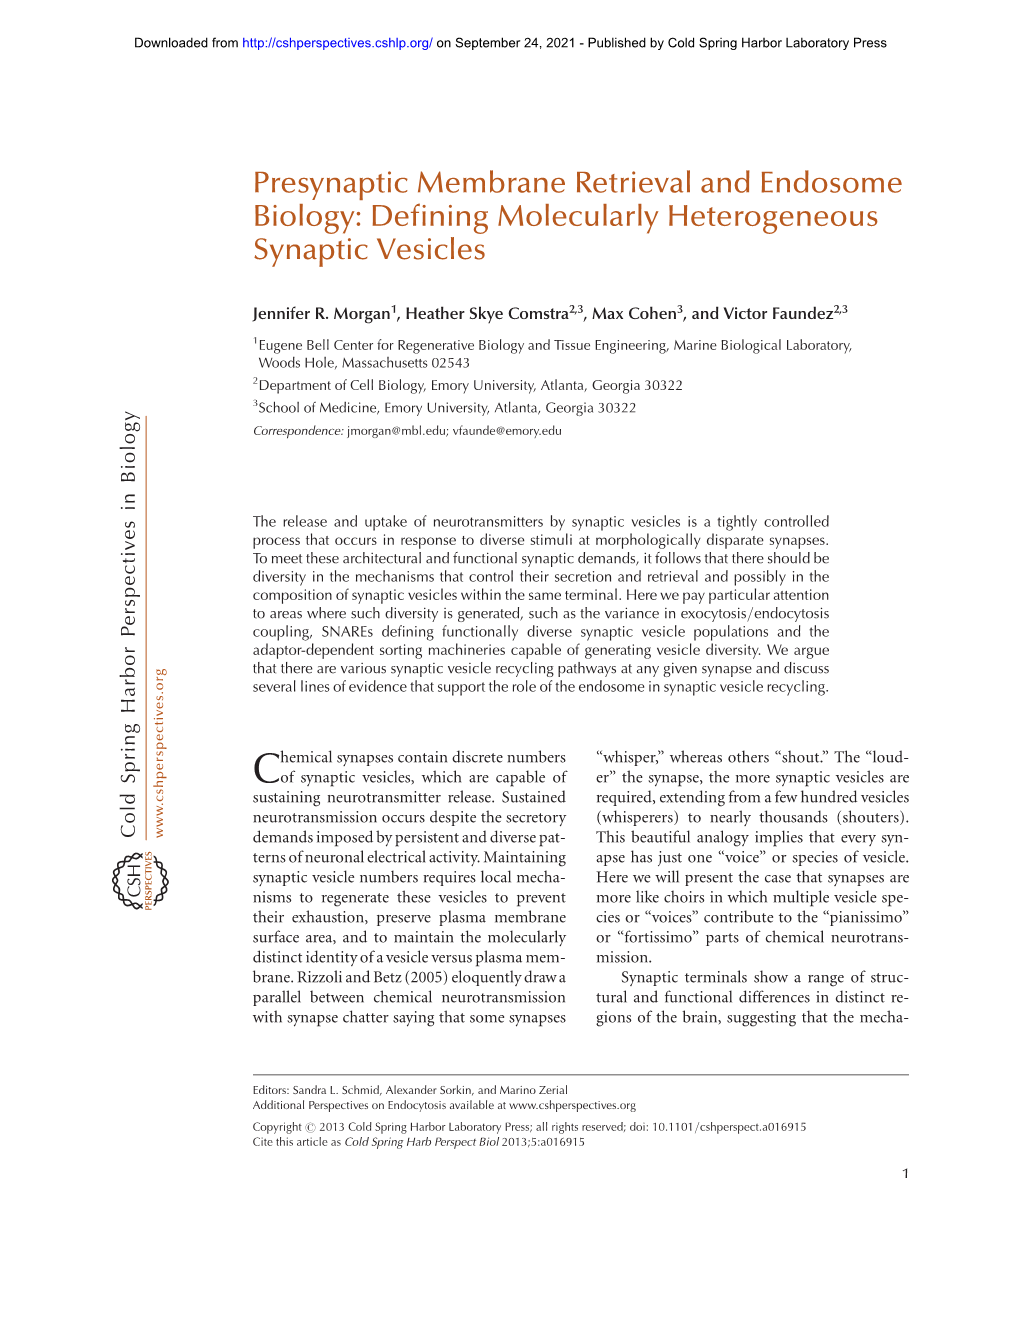 Presynaptic Membrane Retrieval and Endosome Biology: Defining Molecularly Heterogeneous Synaptic Vesicles